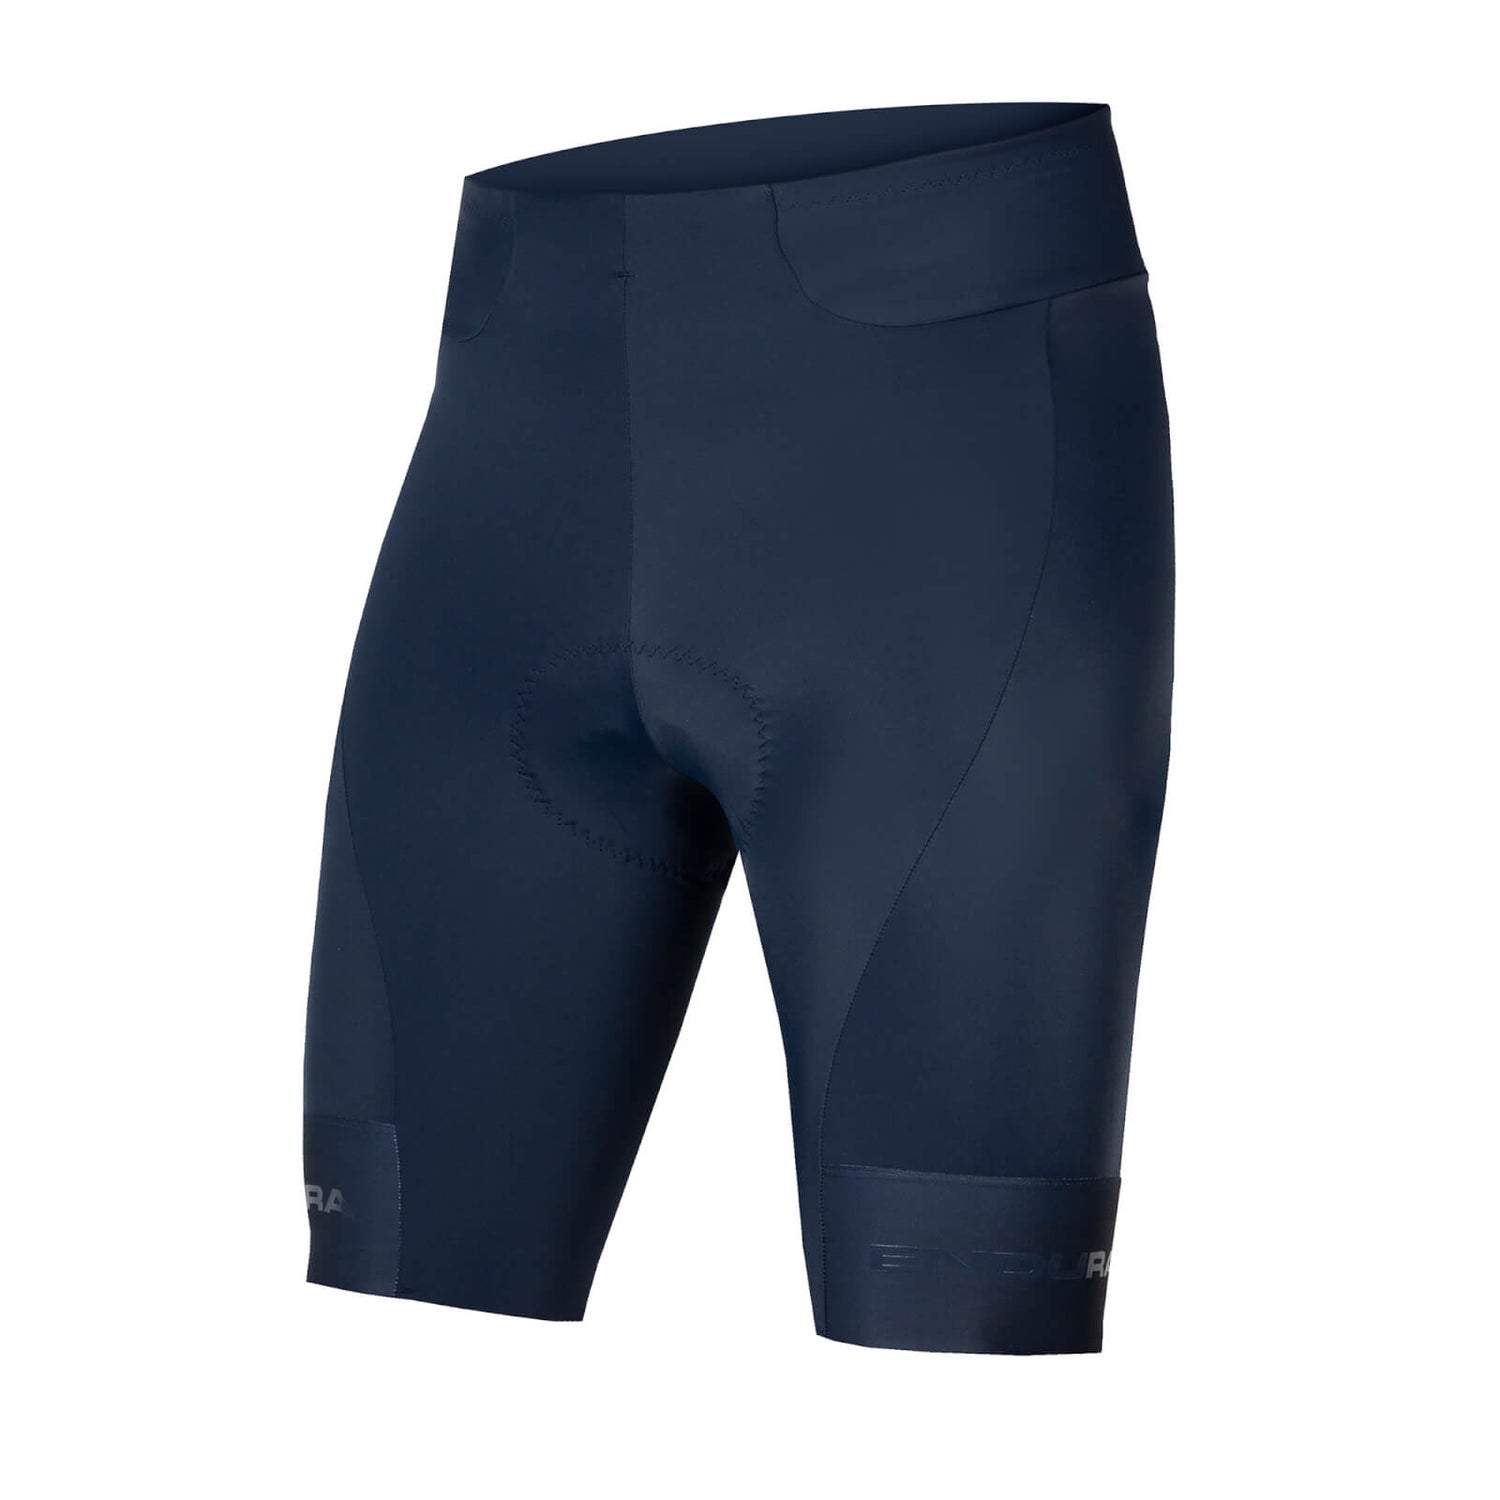 Men's FS260 Waist Shorts - Ink Blue - XXL